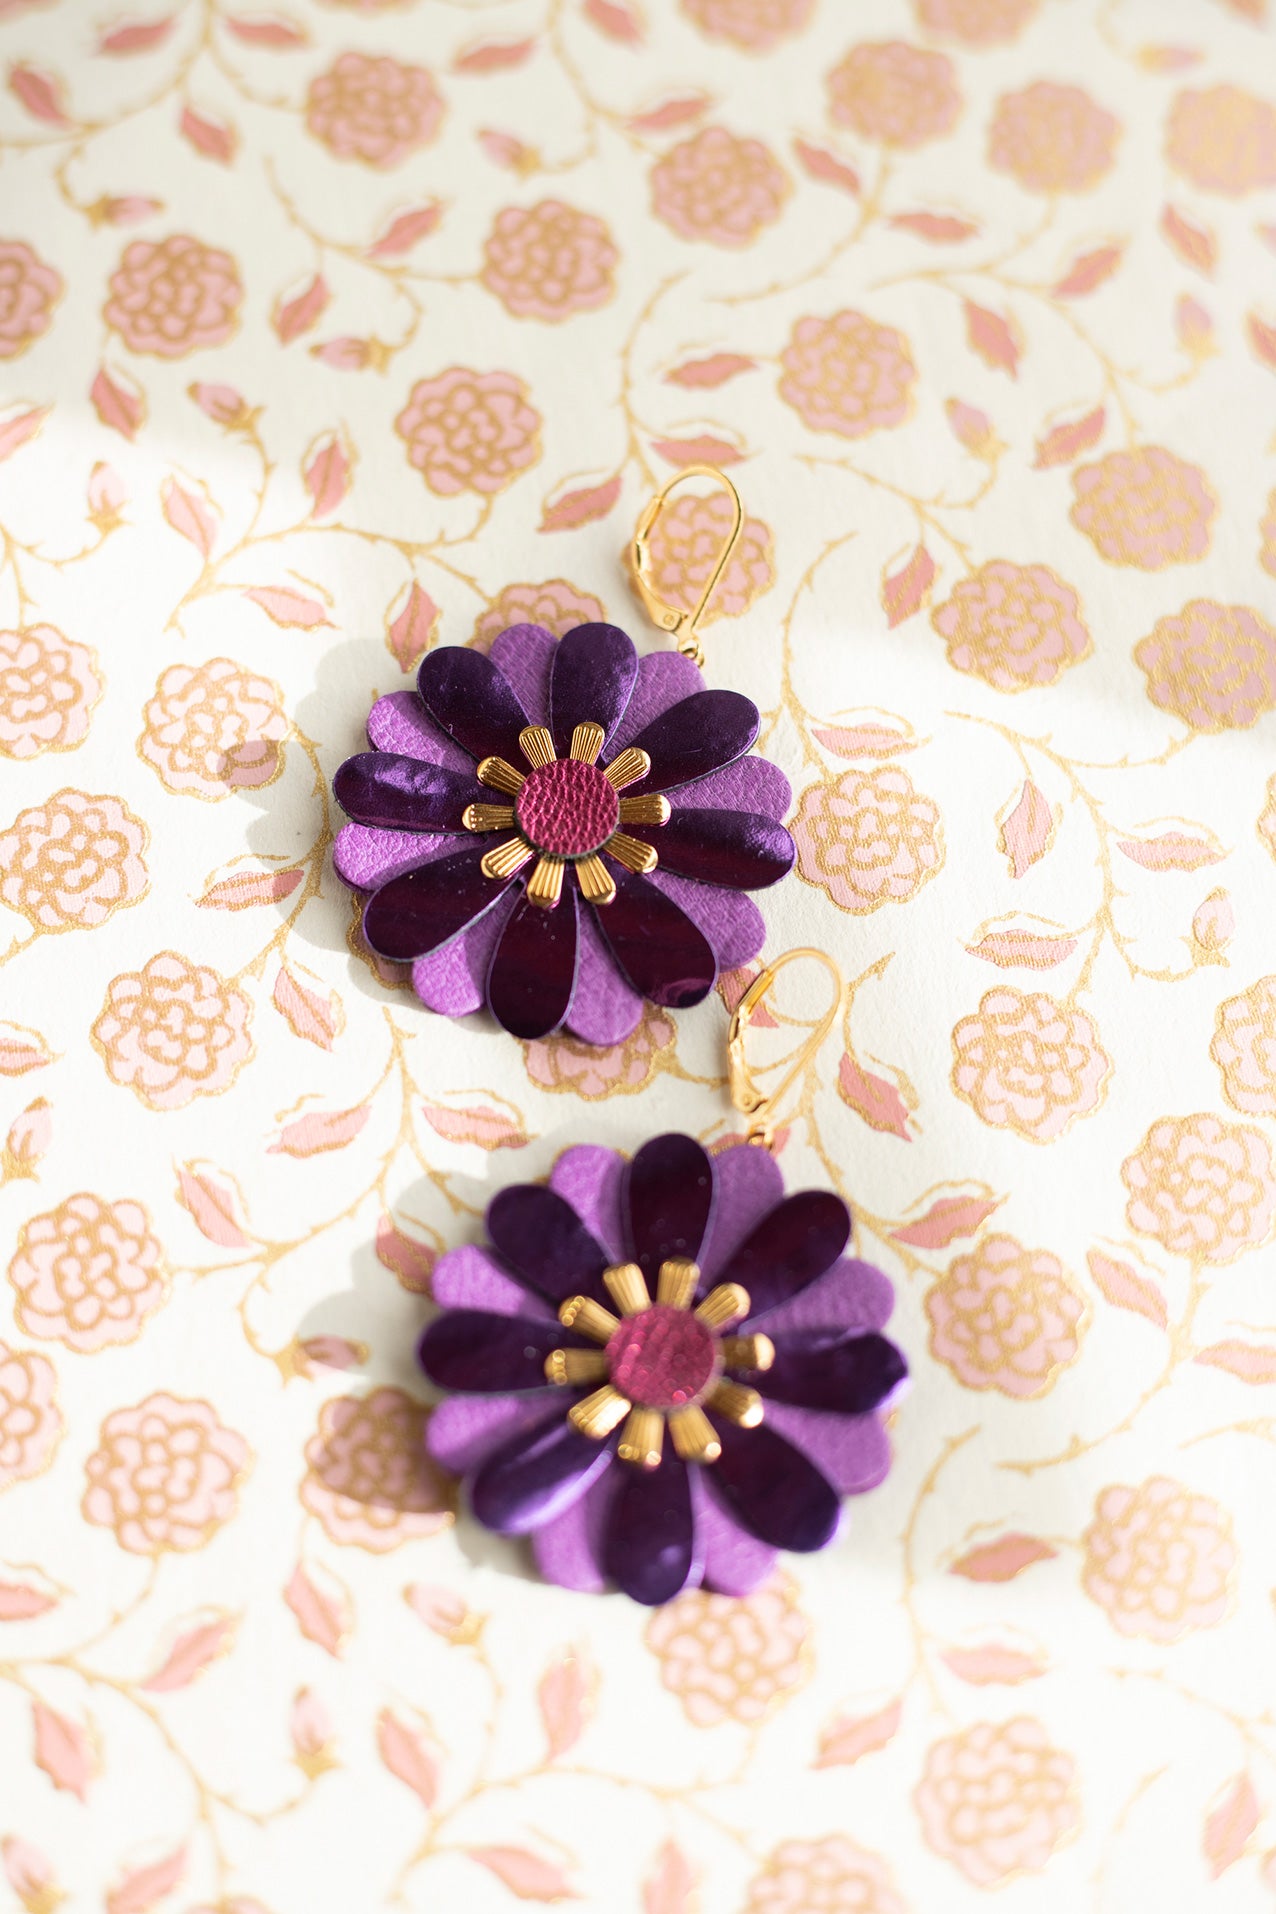 Zinnia flower earrings - metallic purple leather and amethyst